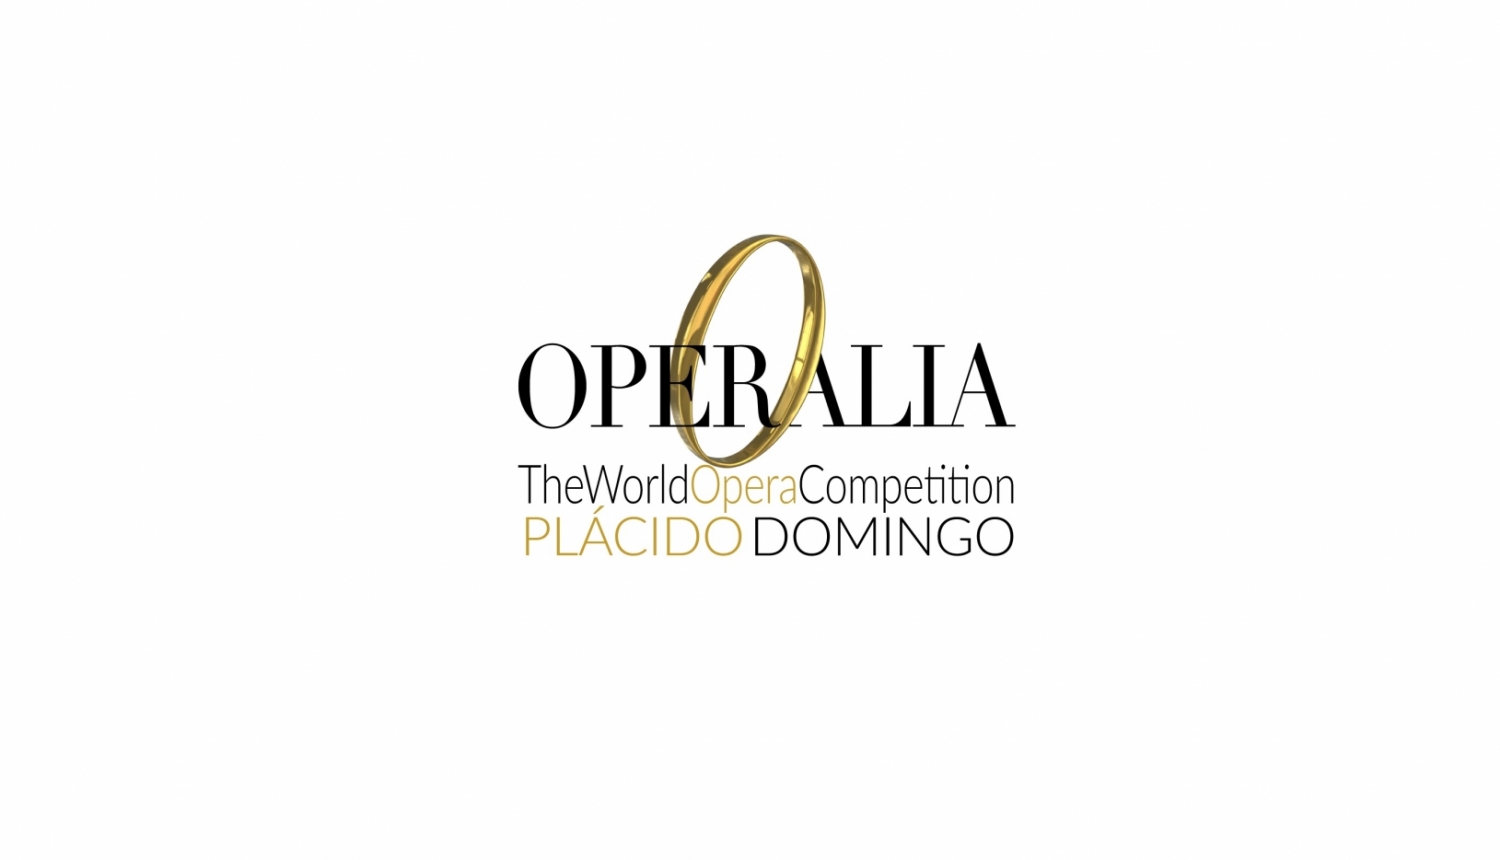 Konkursa "Operalia" logo